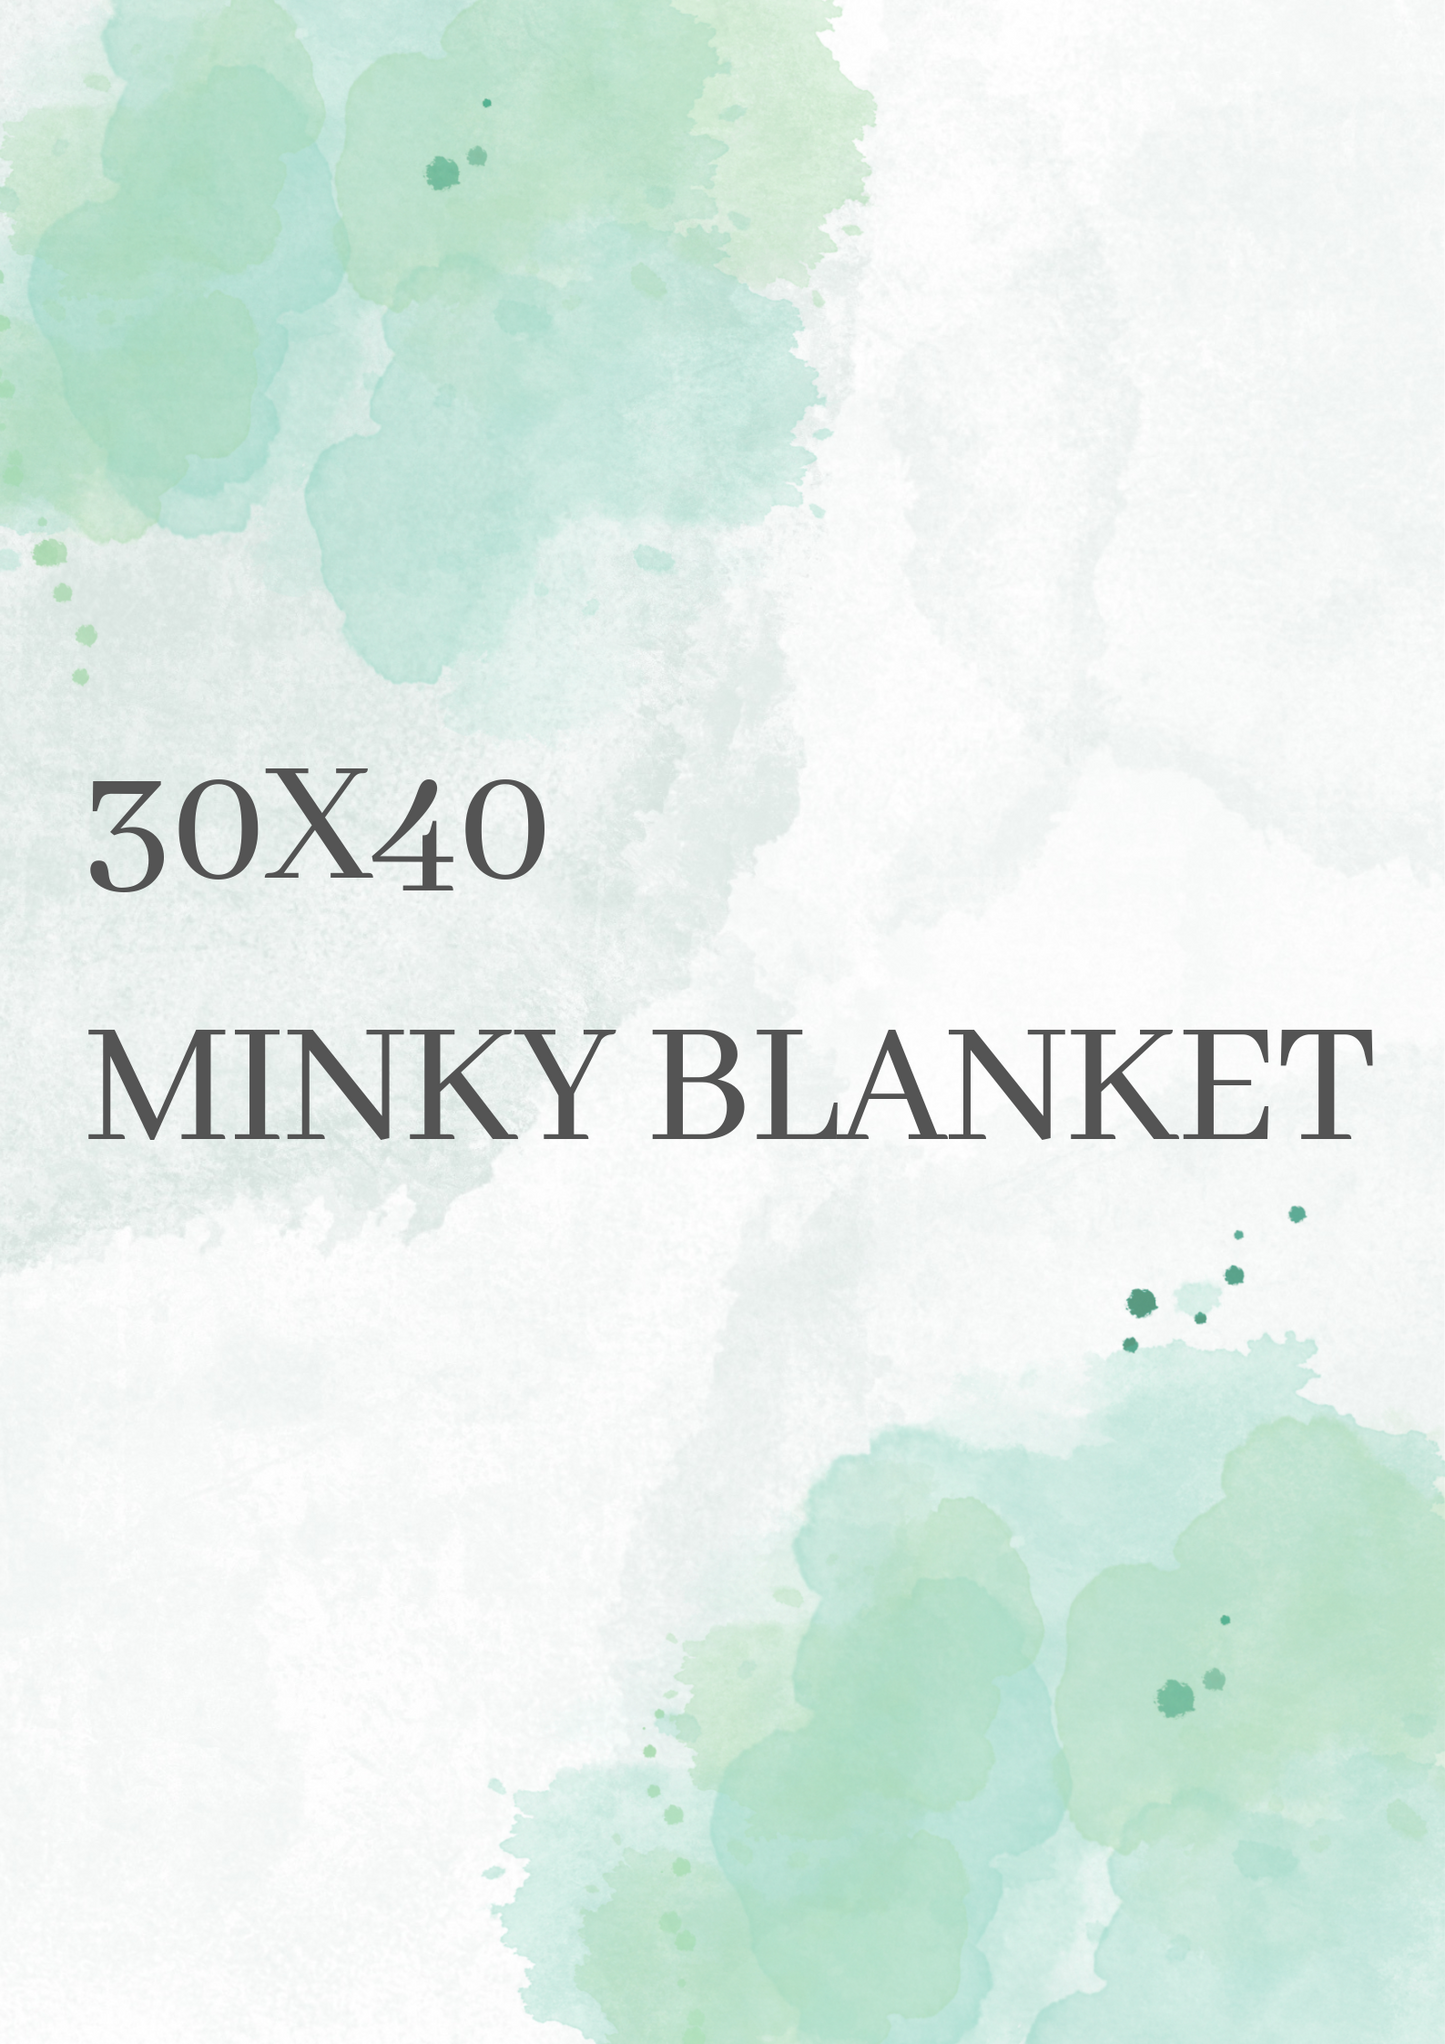 30x40 Minky Blanket